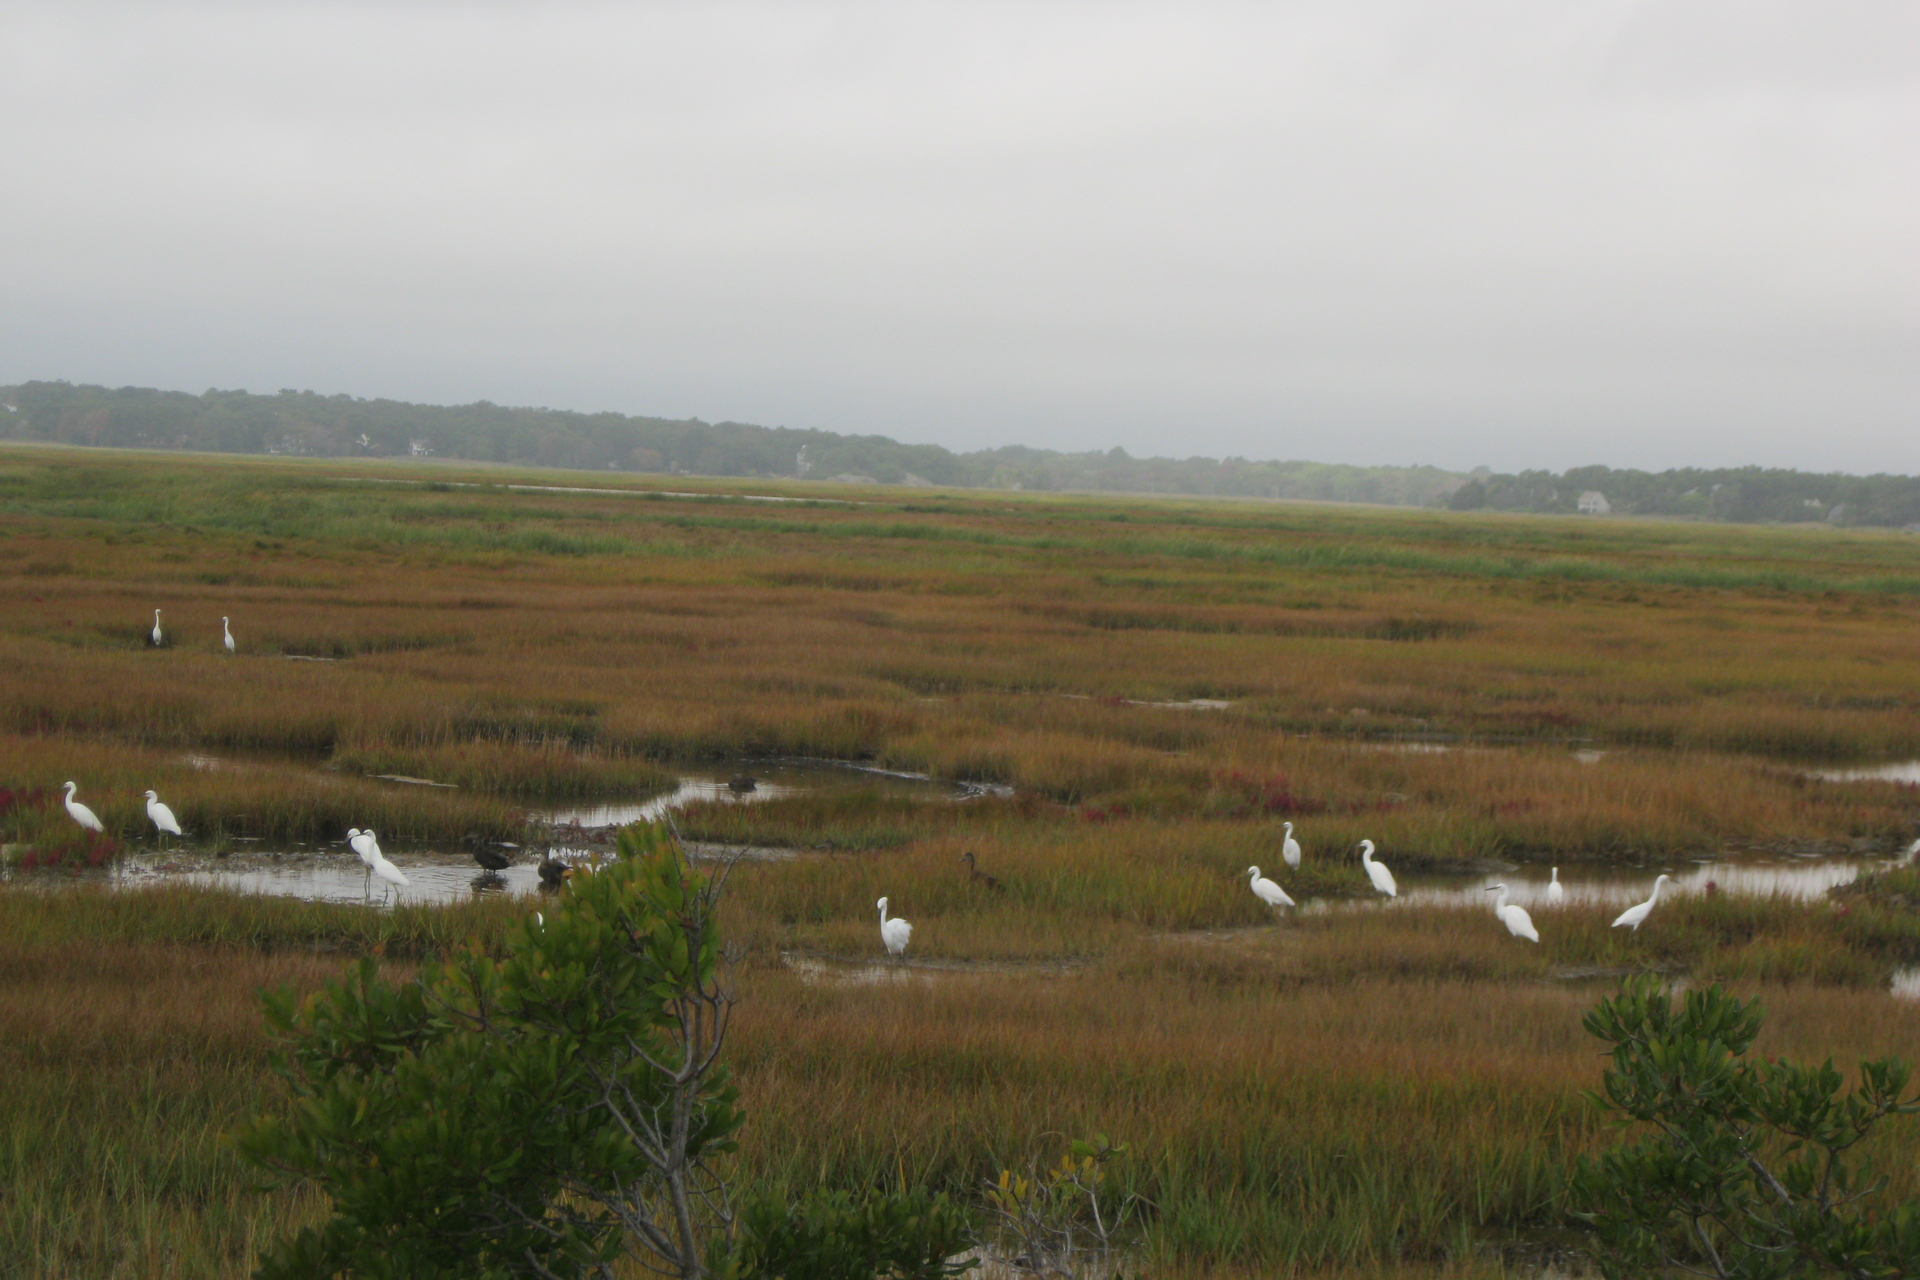 A dozen egrets scattered across a salt marsh on a gray, gloomy day.